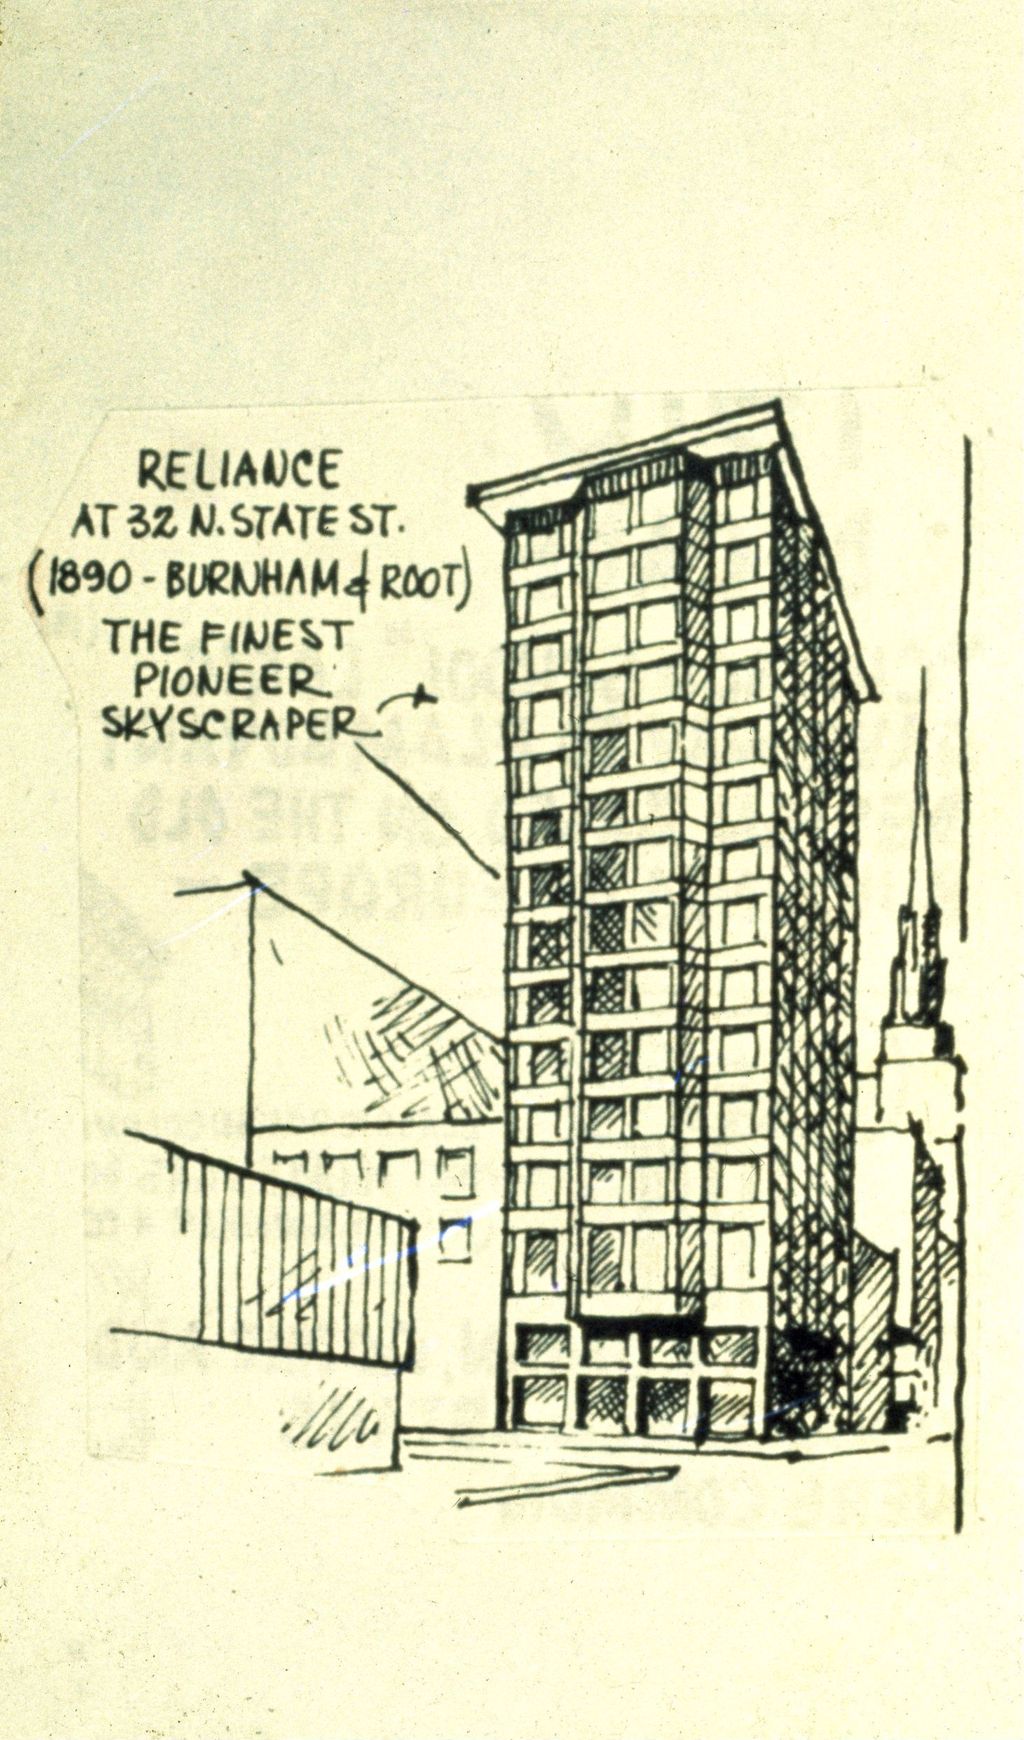 Miniature of Reliance Building